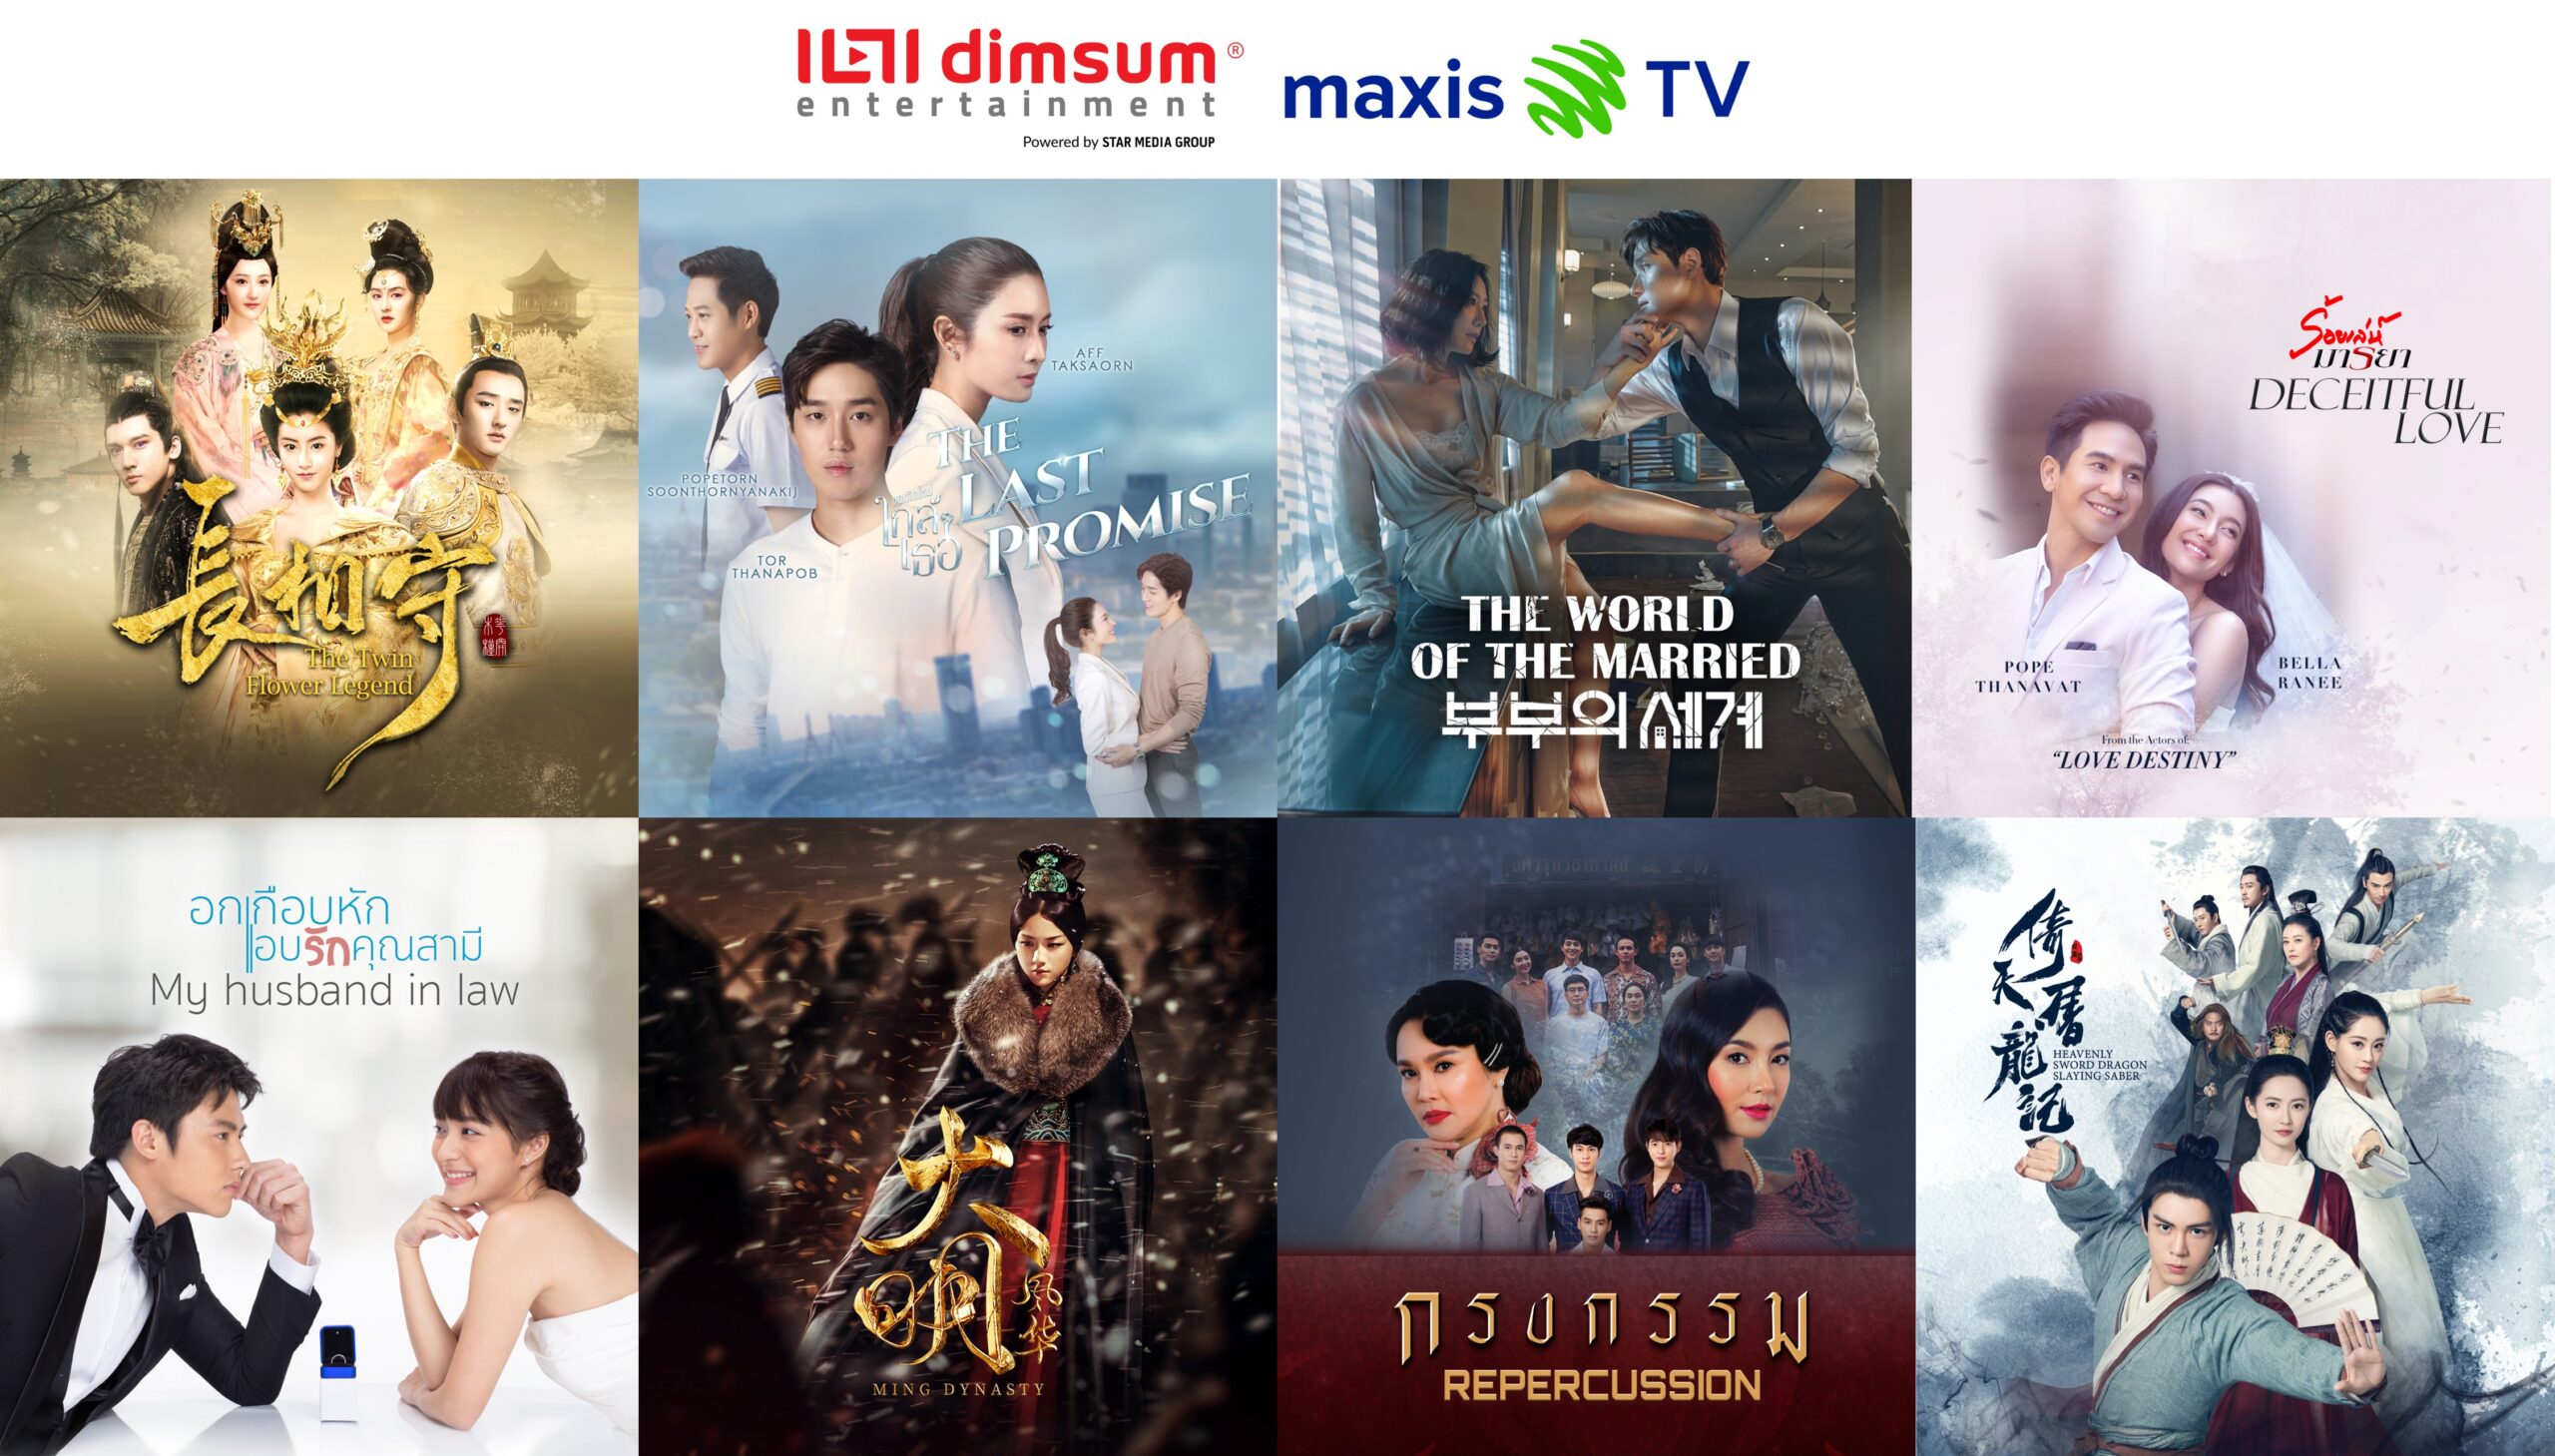 Dimsum Entertainment x Maxis TV 2.0 scaled